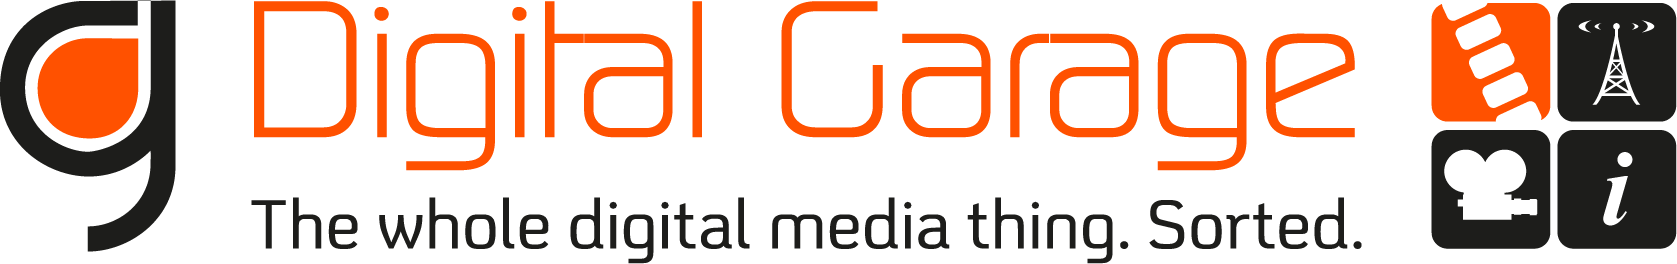 logo for The Digital Garage Group Limited